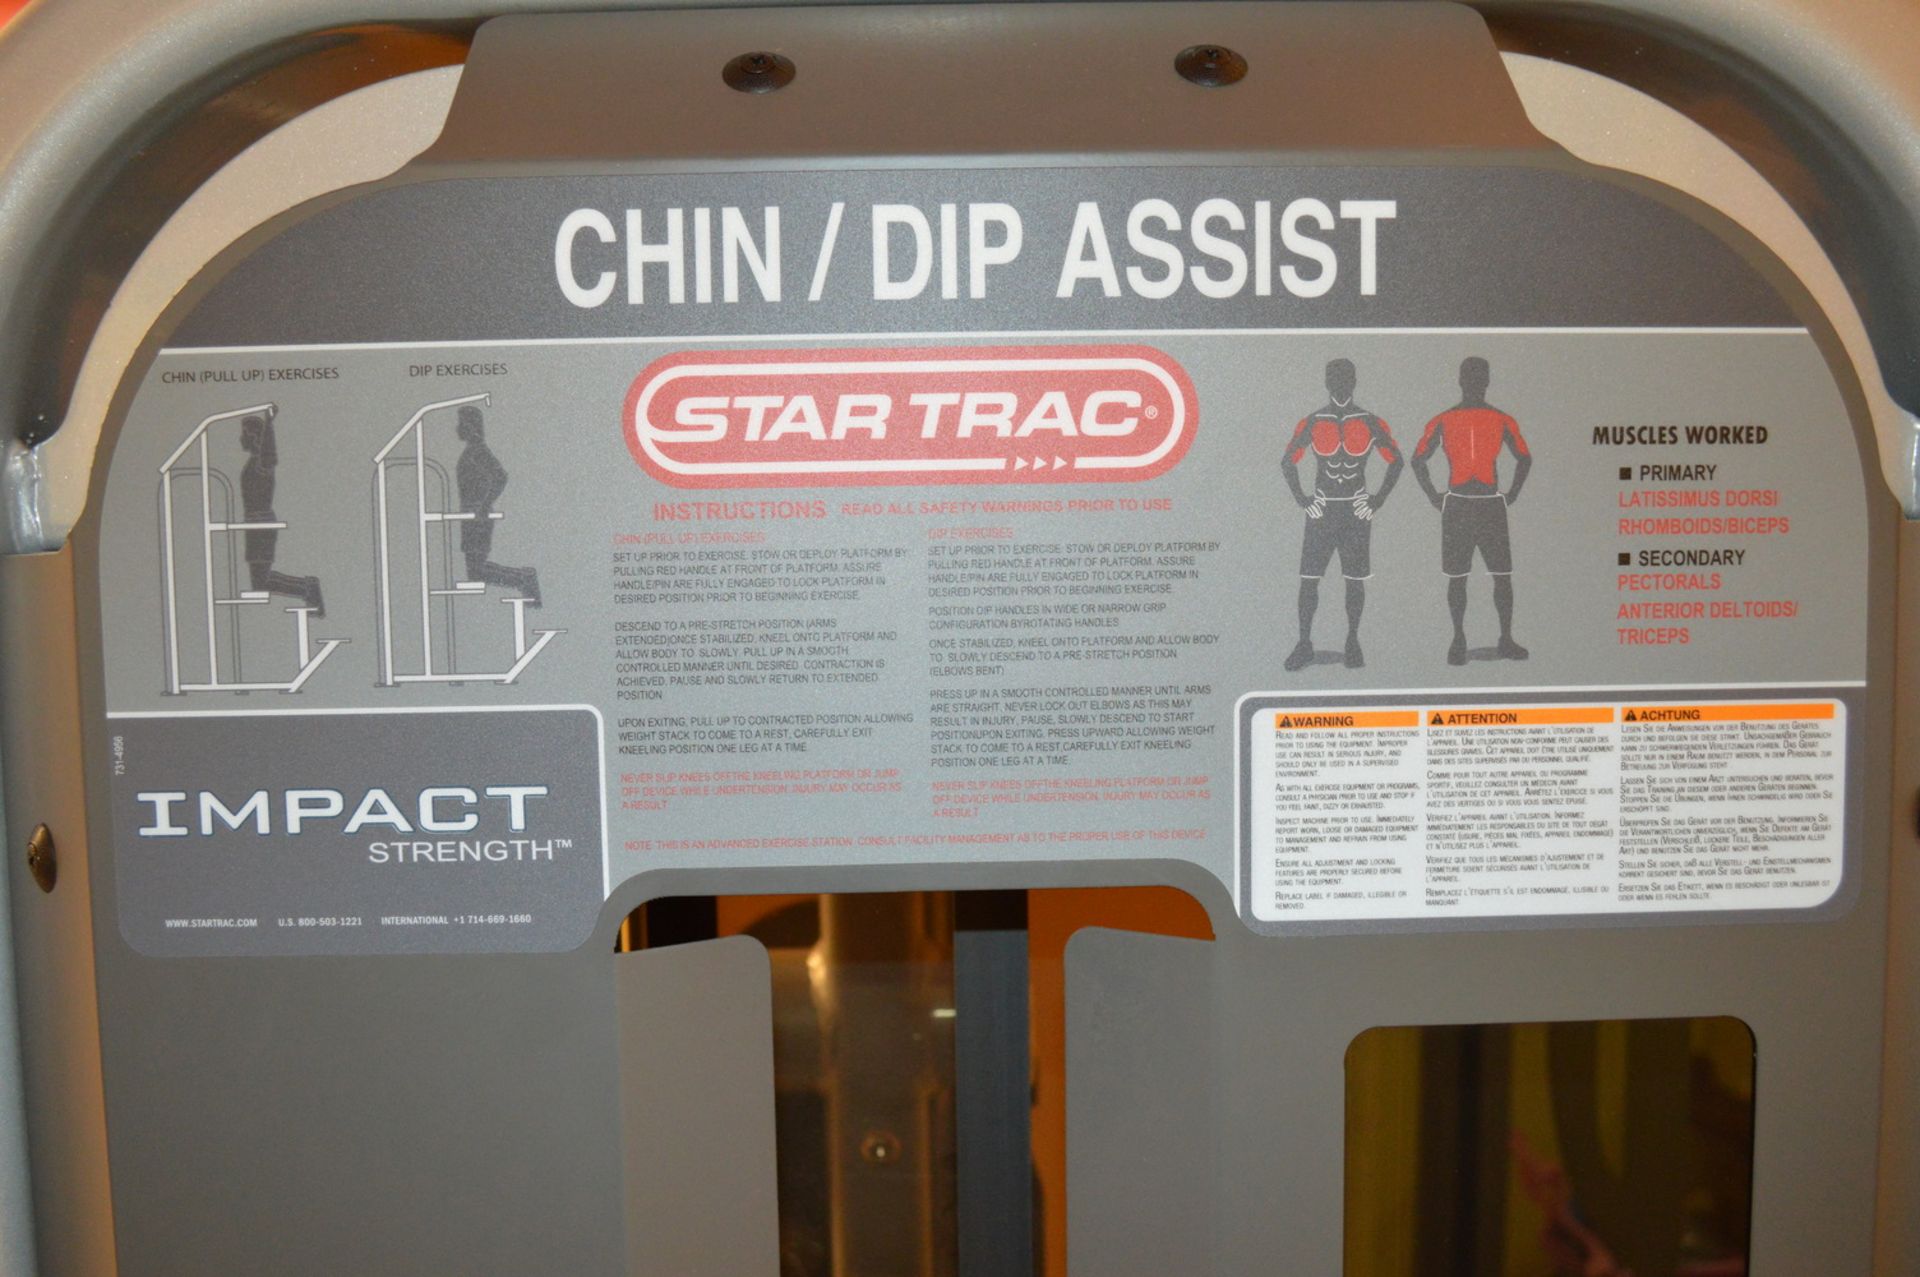 Star Trac Chin / Dip Assist Machine - Image 2 of 3